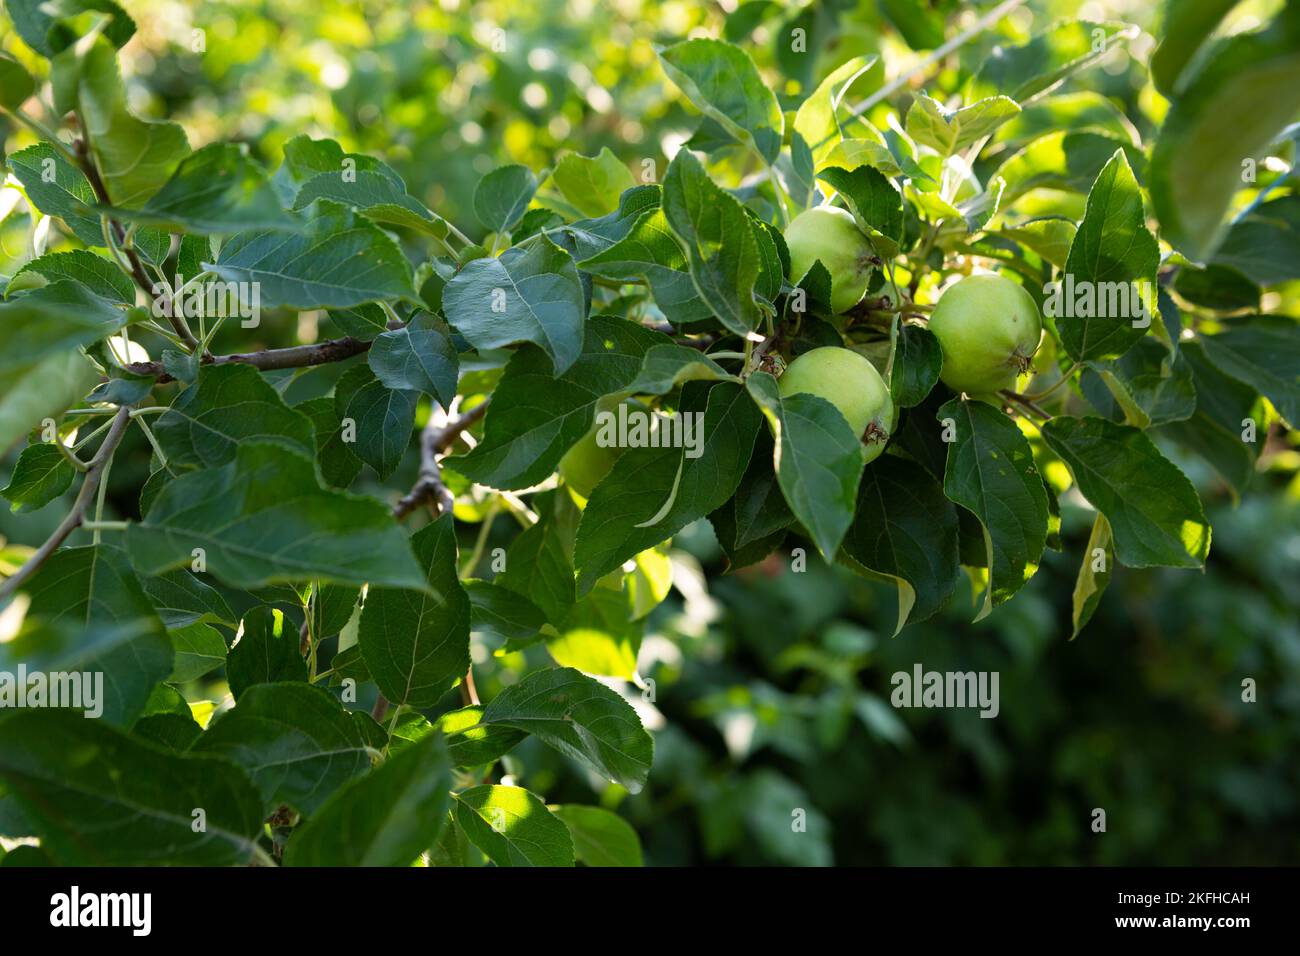 Spring garden green apples on tree Stock Photo